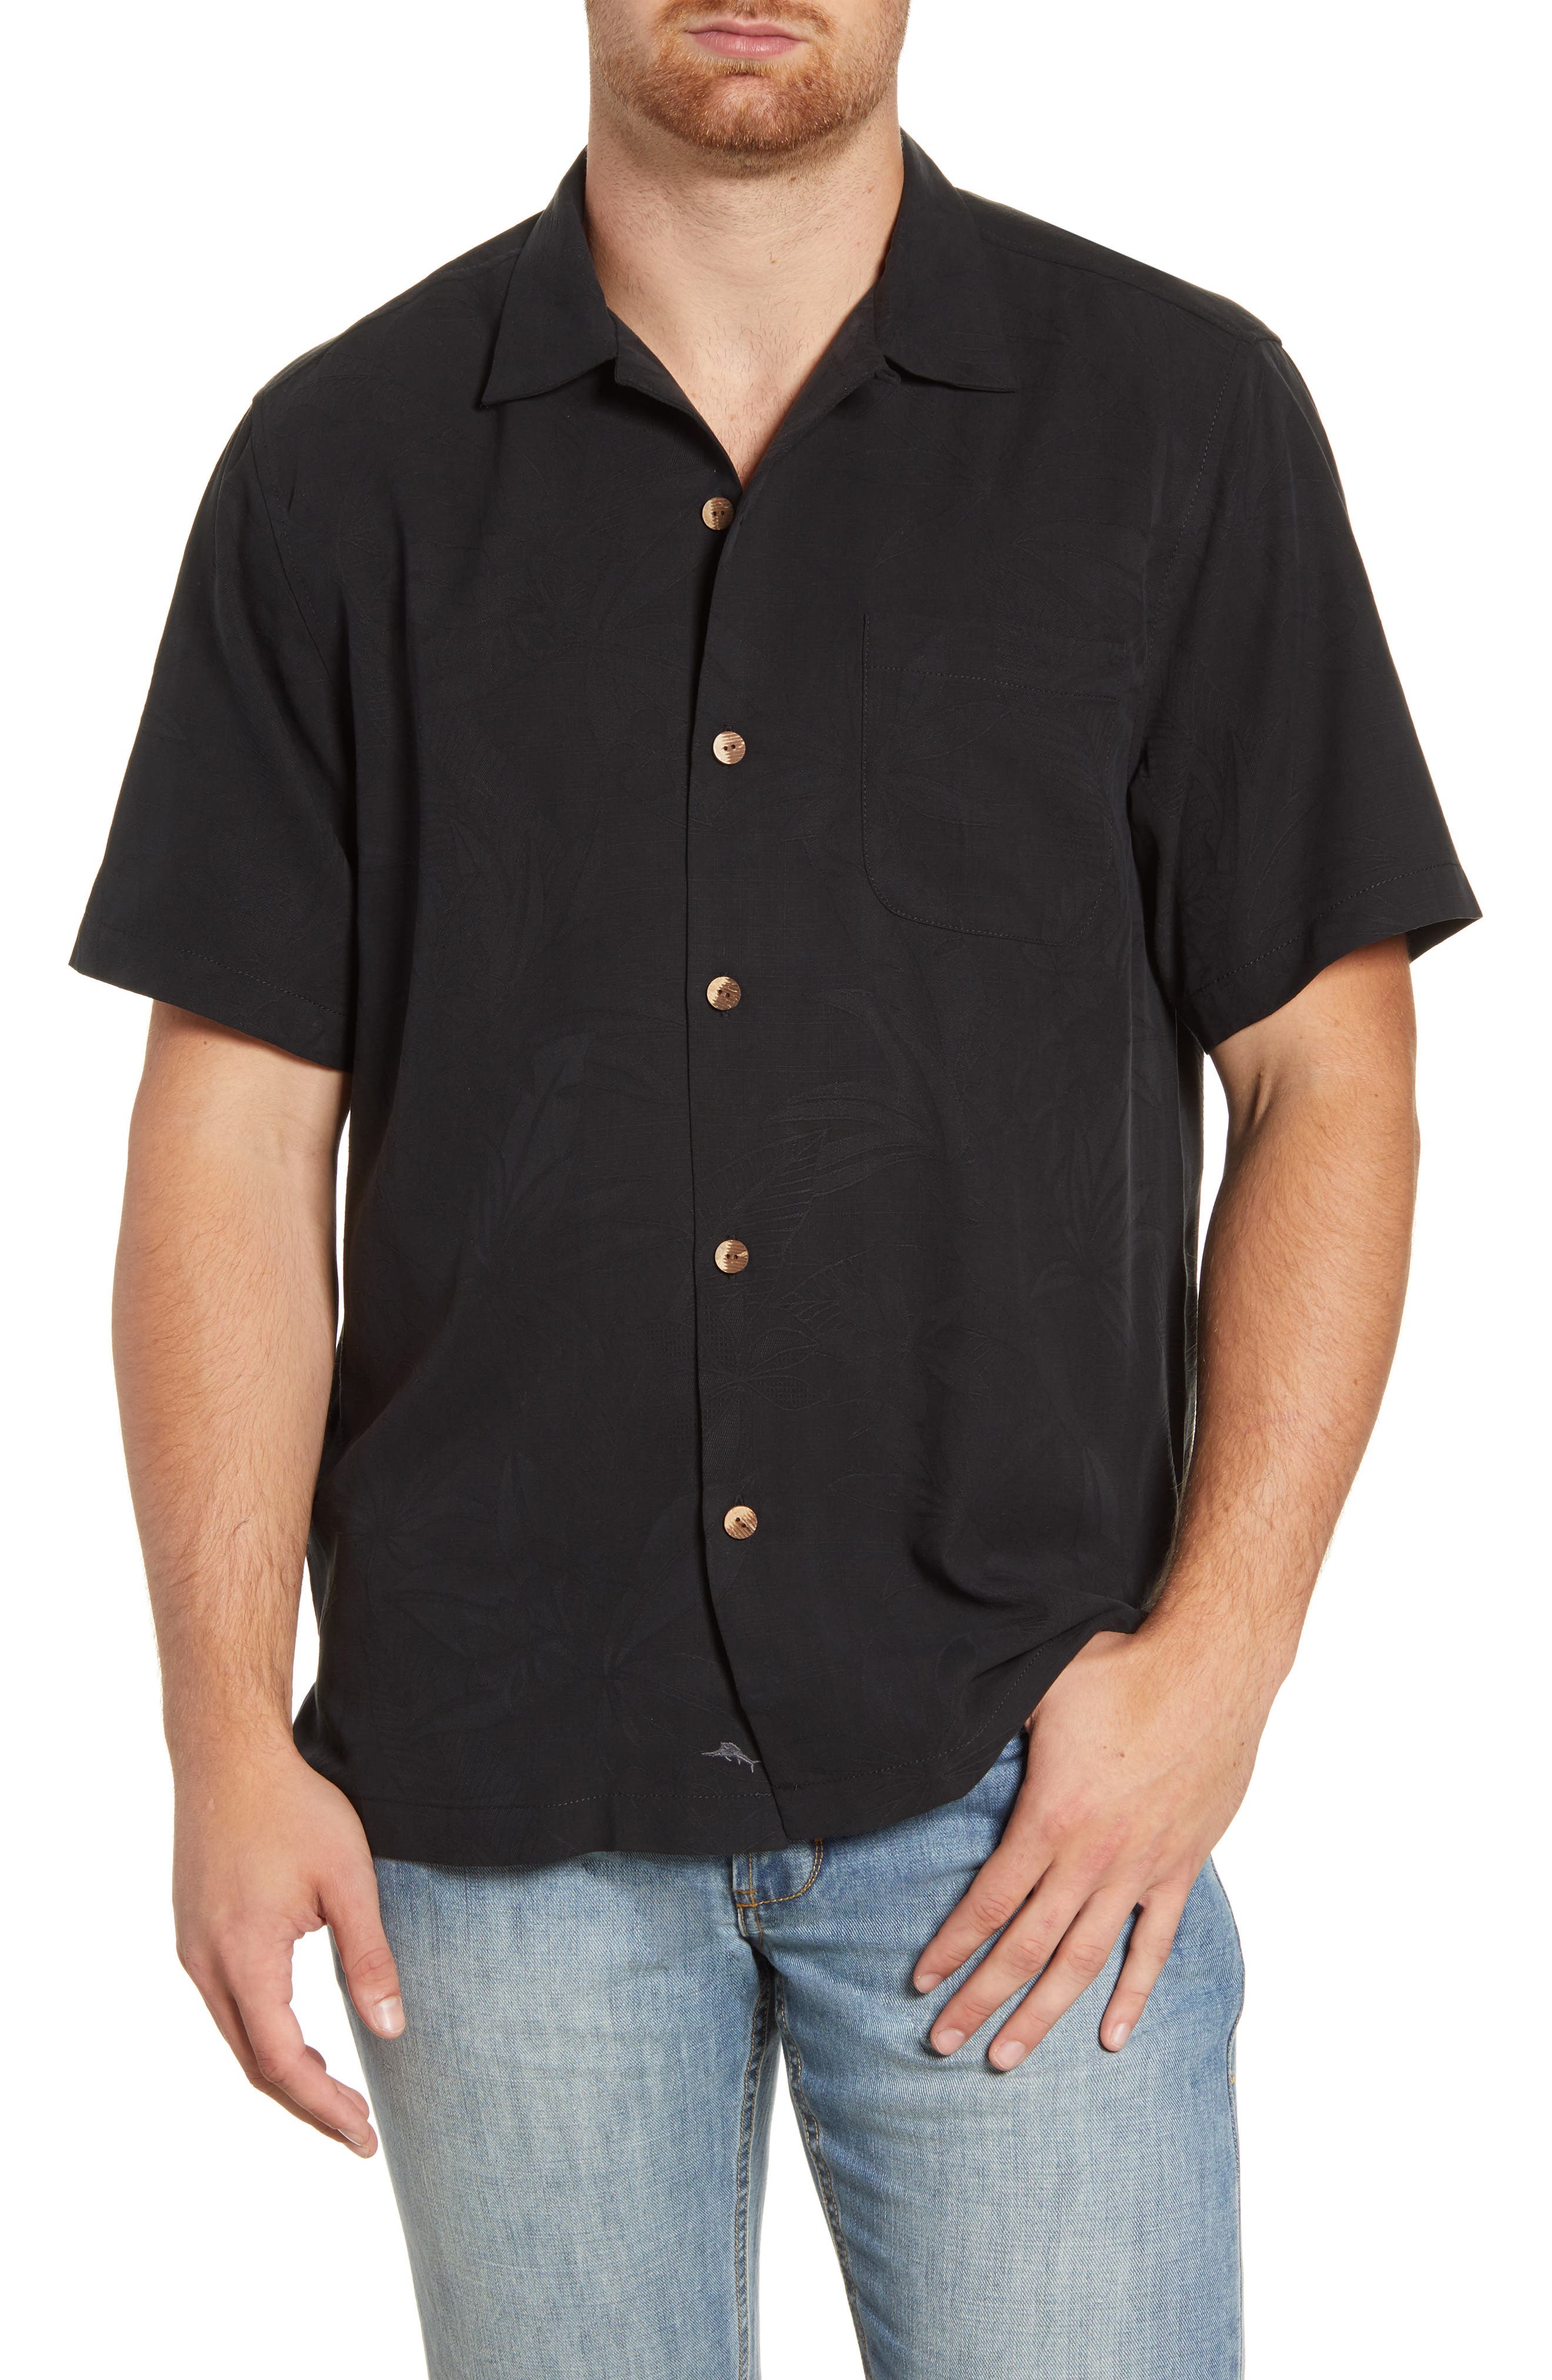 tommy bahama black shirt